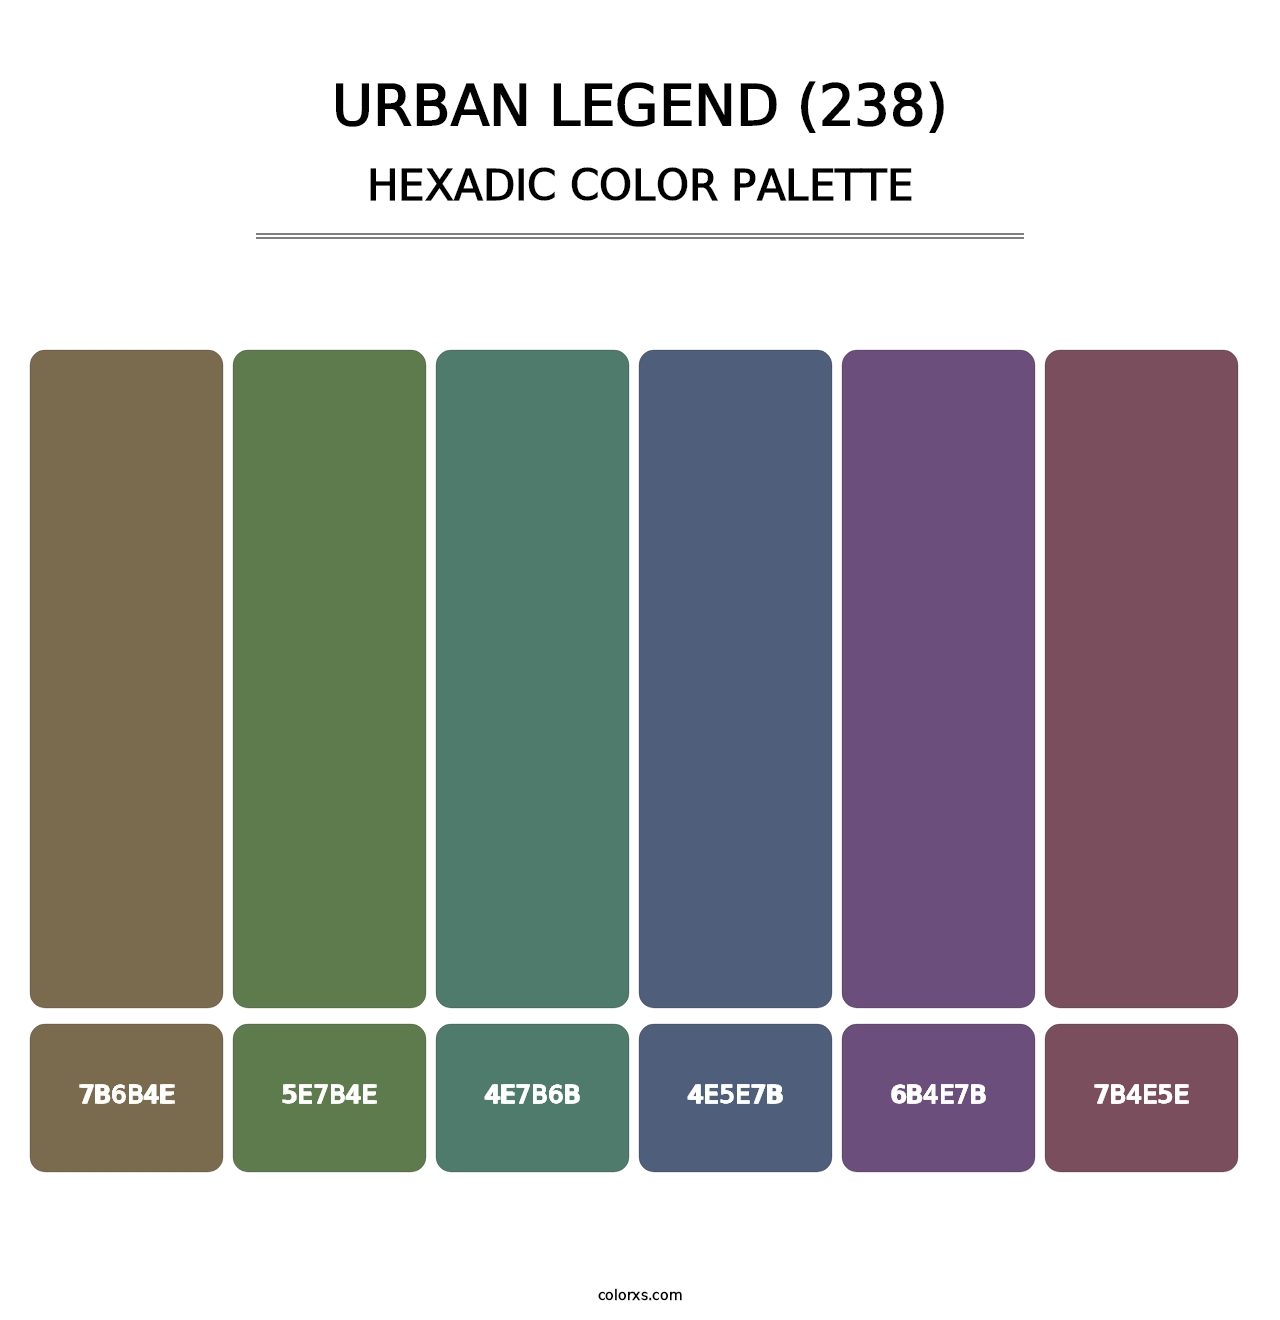 Urban Legend (238) - Hexadic Color Palette